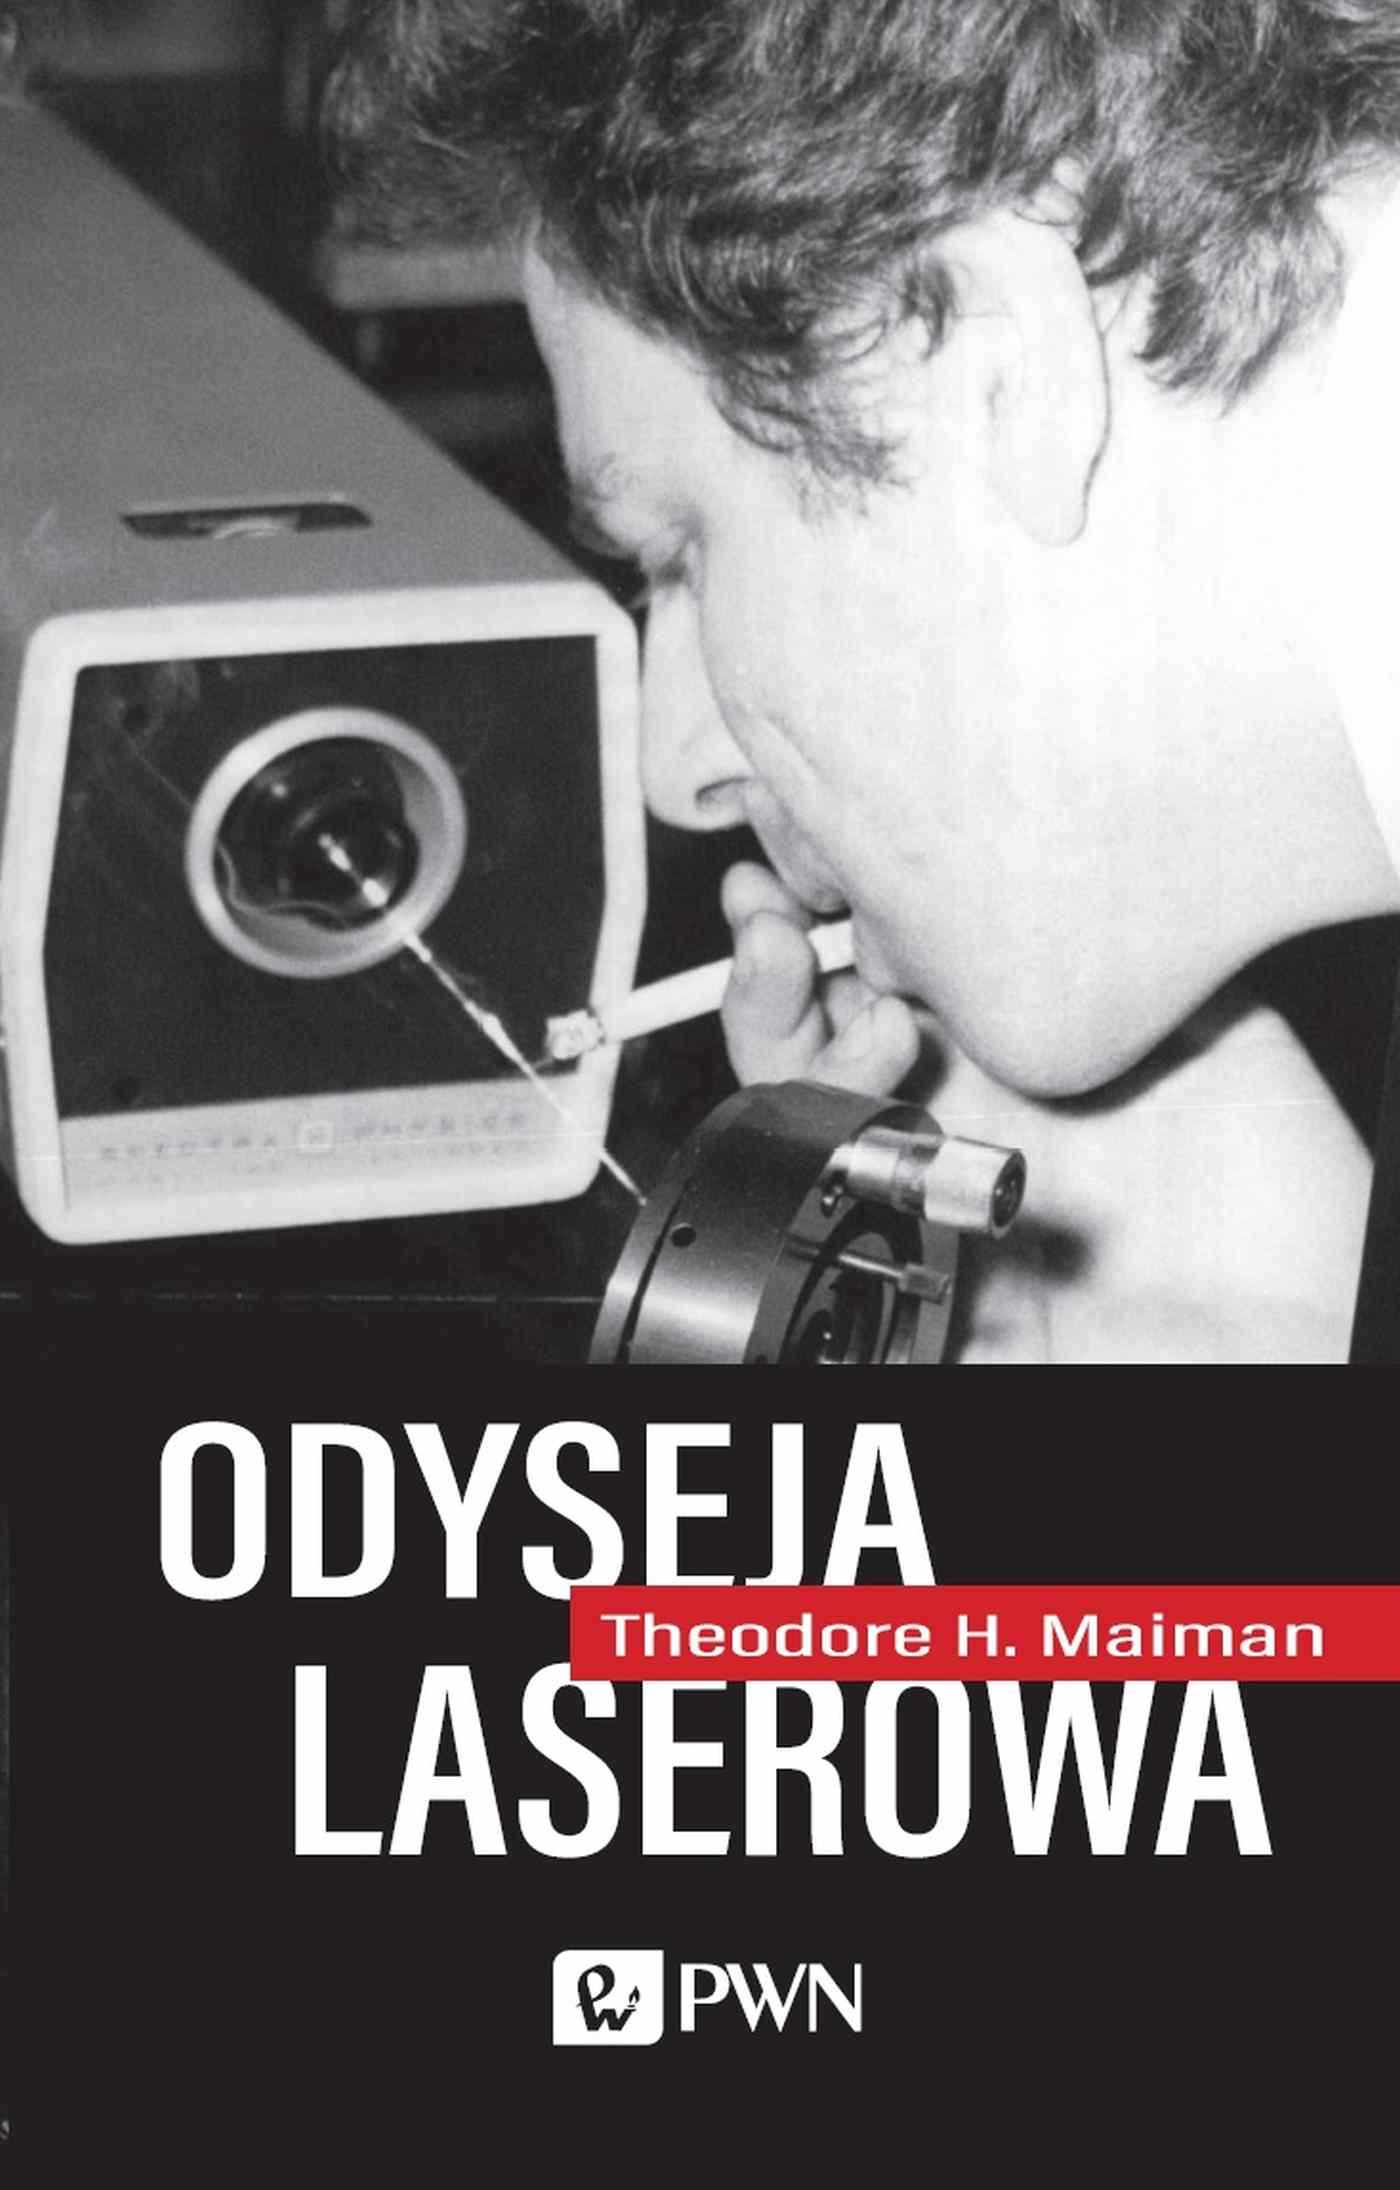 Book Odyseja laserowa Theodore H. Maiman